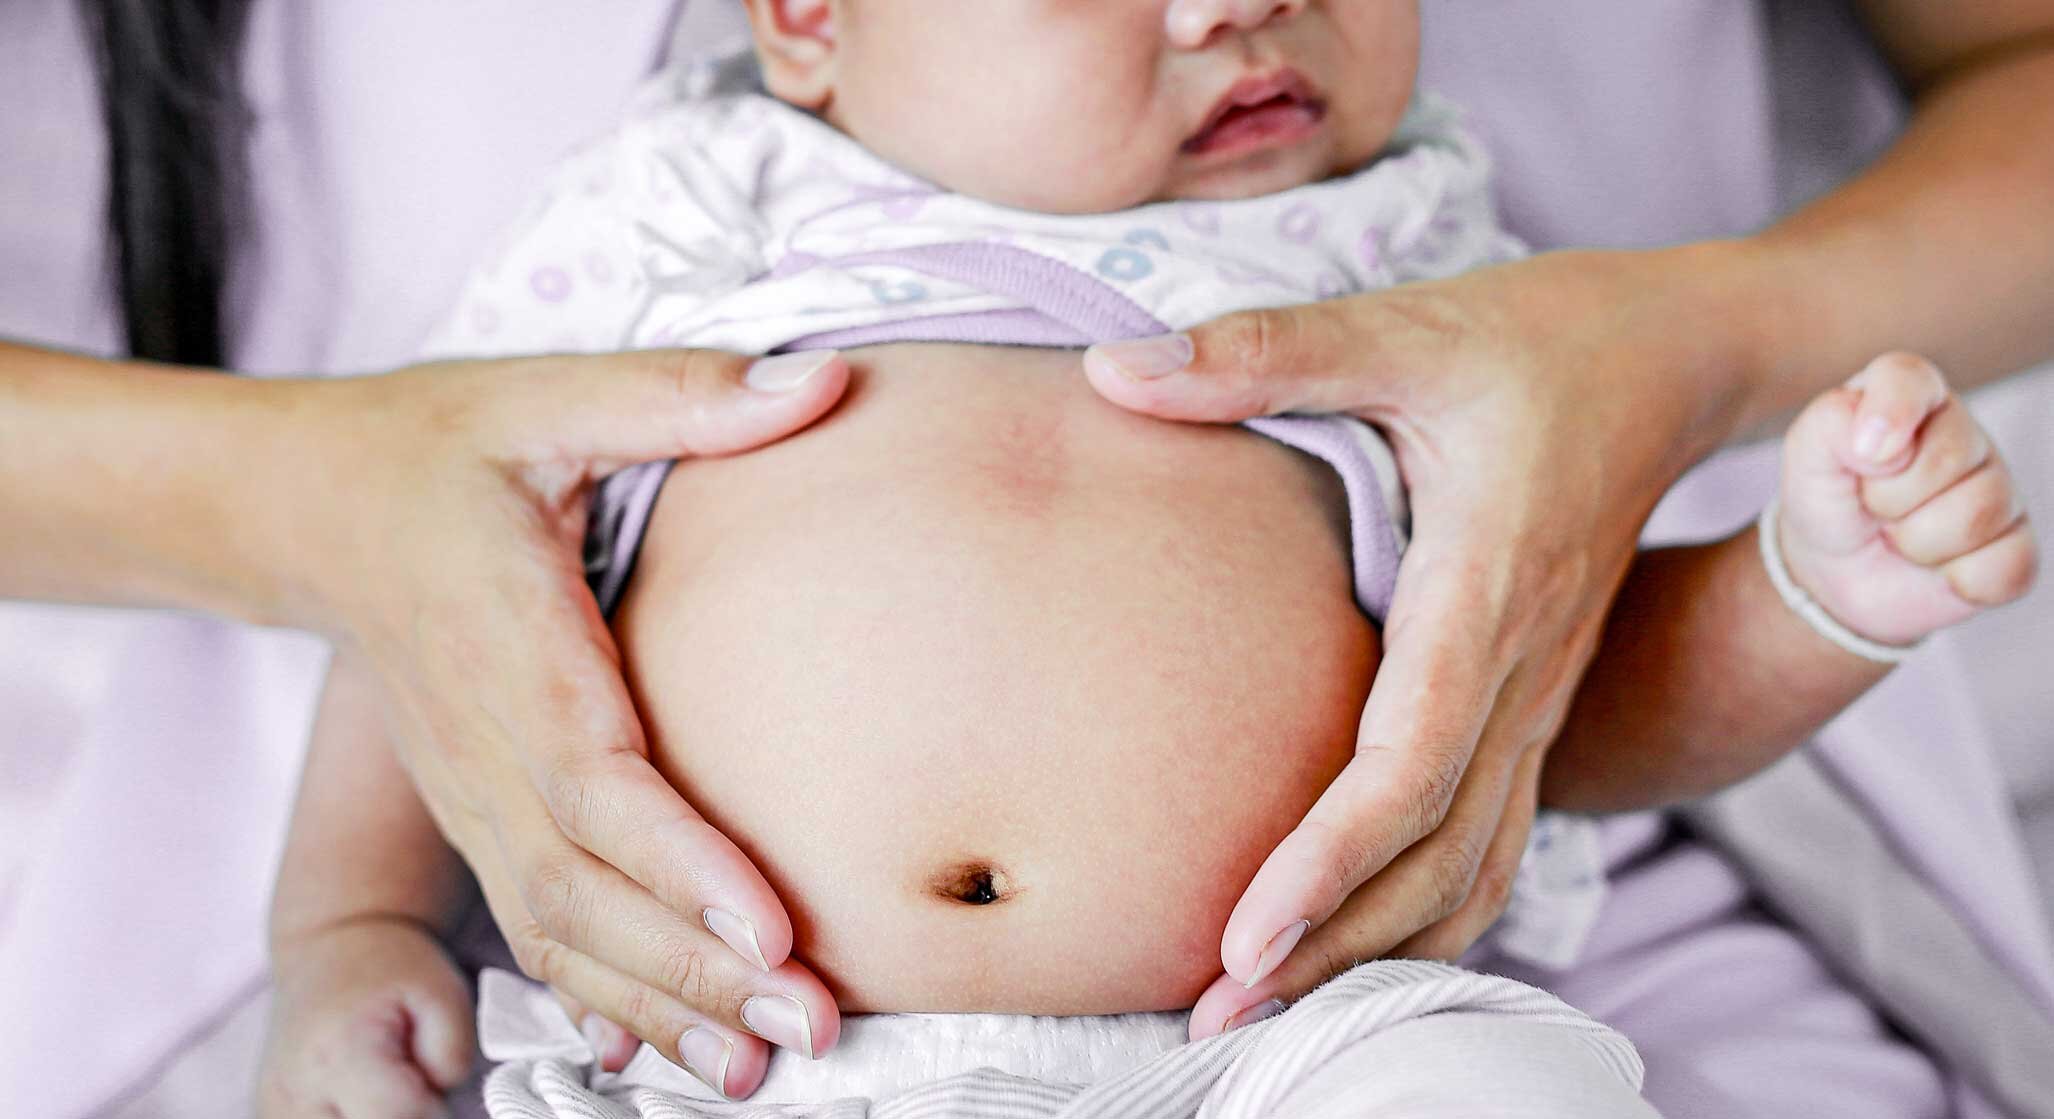 Laktoseintolerantes Baby hat einen Blähbauch